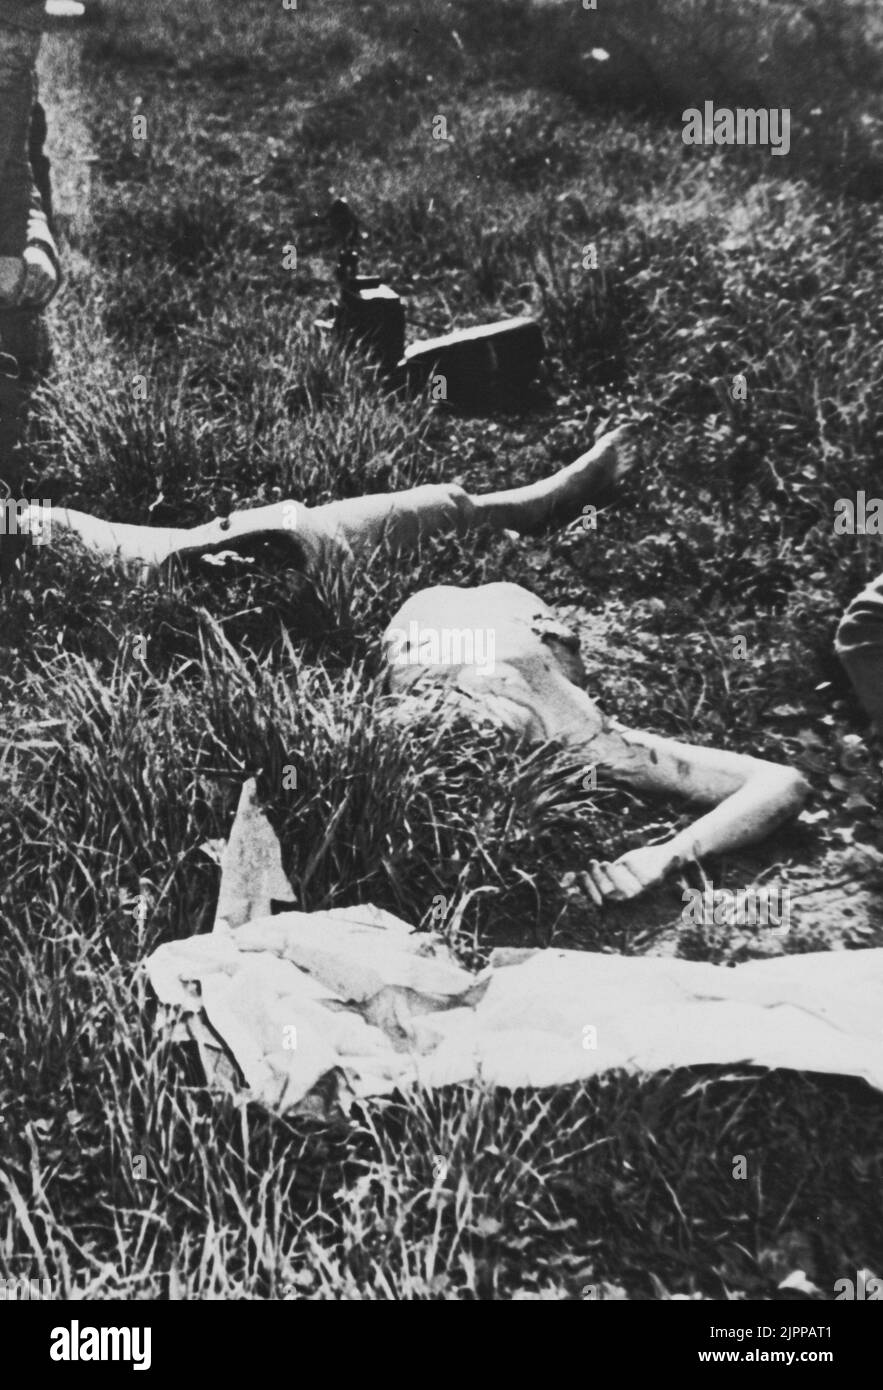 ELIZABETH SHORT alias The Black Dahlia ( 1924 - 1947 ). The january 15th , 1947 Elizabeth body was found in two pieces at a vacant lot in Hollywood . The murder is still unsolved - CINEMA - MYSTERY - MISTERO - delitto insoluto - omicidio - CRONACA NERA  - cult macabro  ----  Archivio GBB Stock Photo